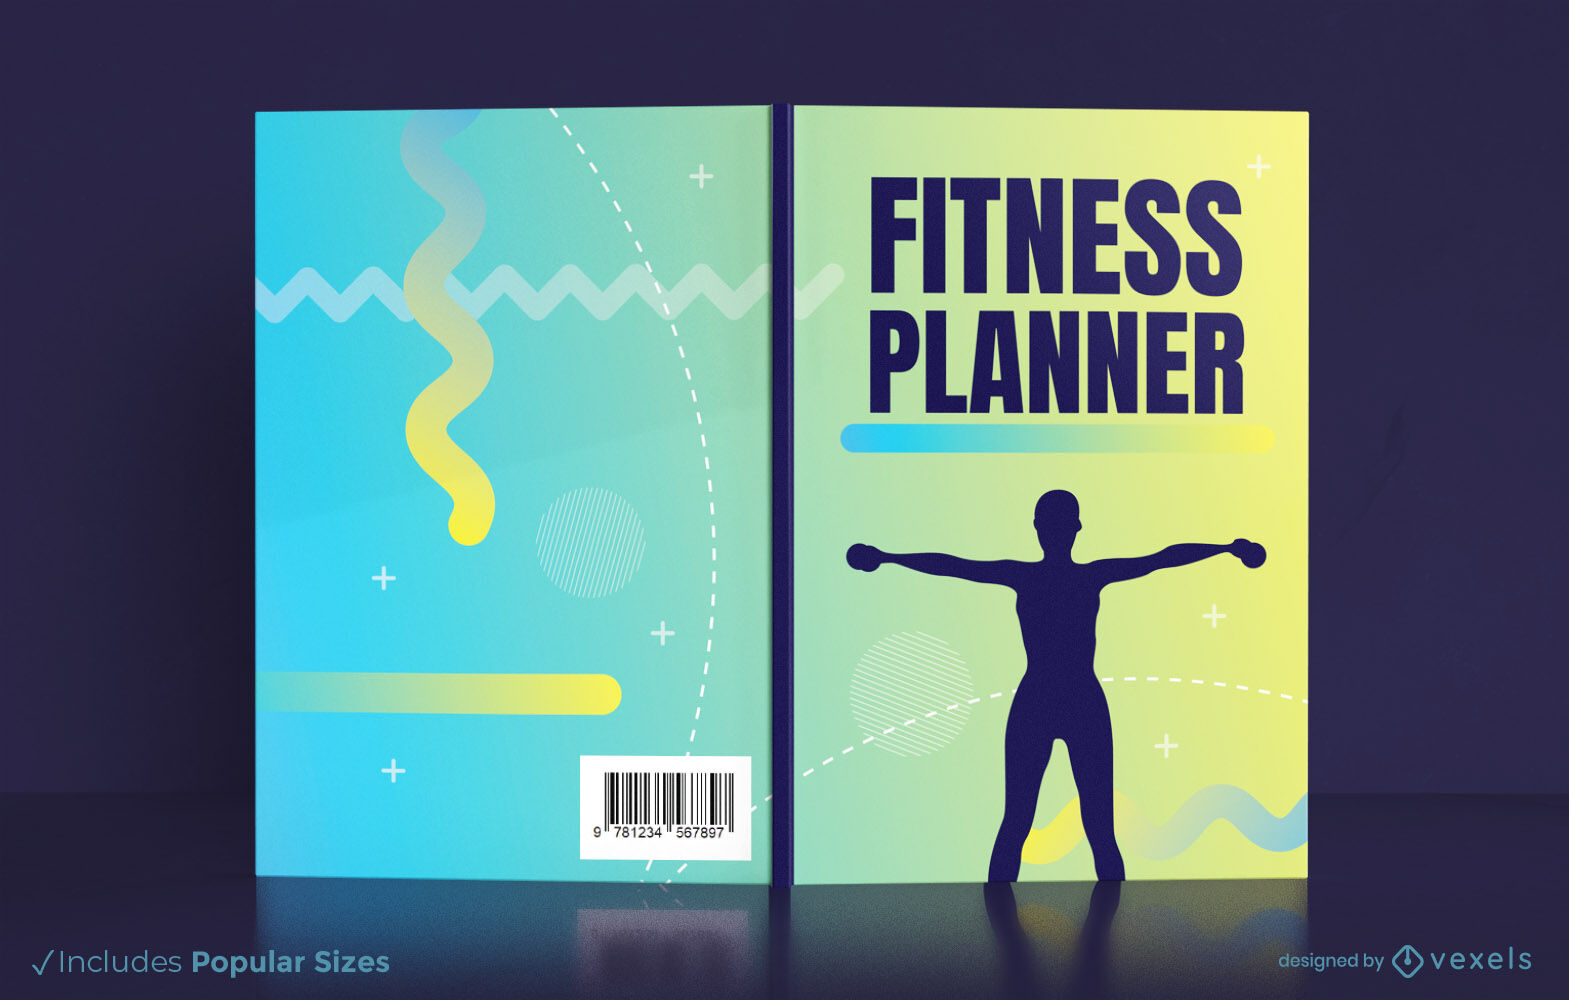 Fitness planner book cover design KDP